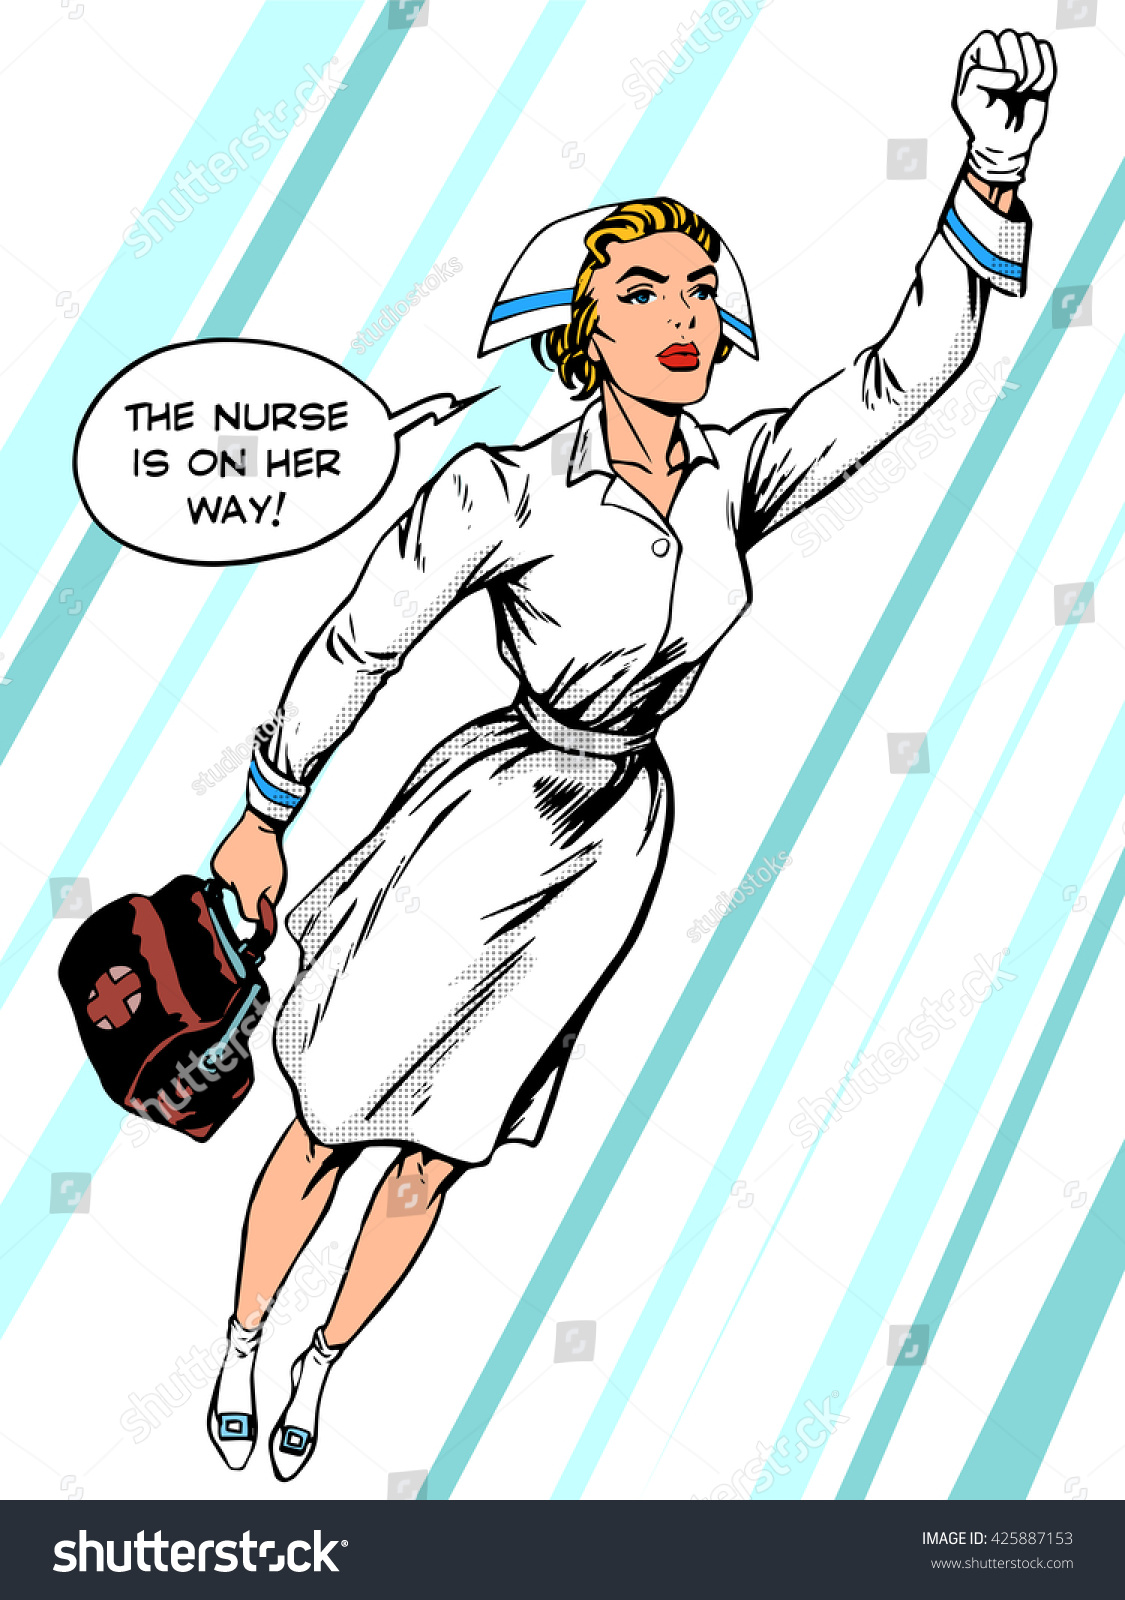 Nurse Superhero: stockillustratie 425887153 Shutterstock.